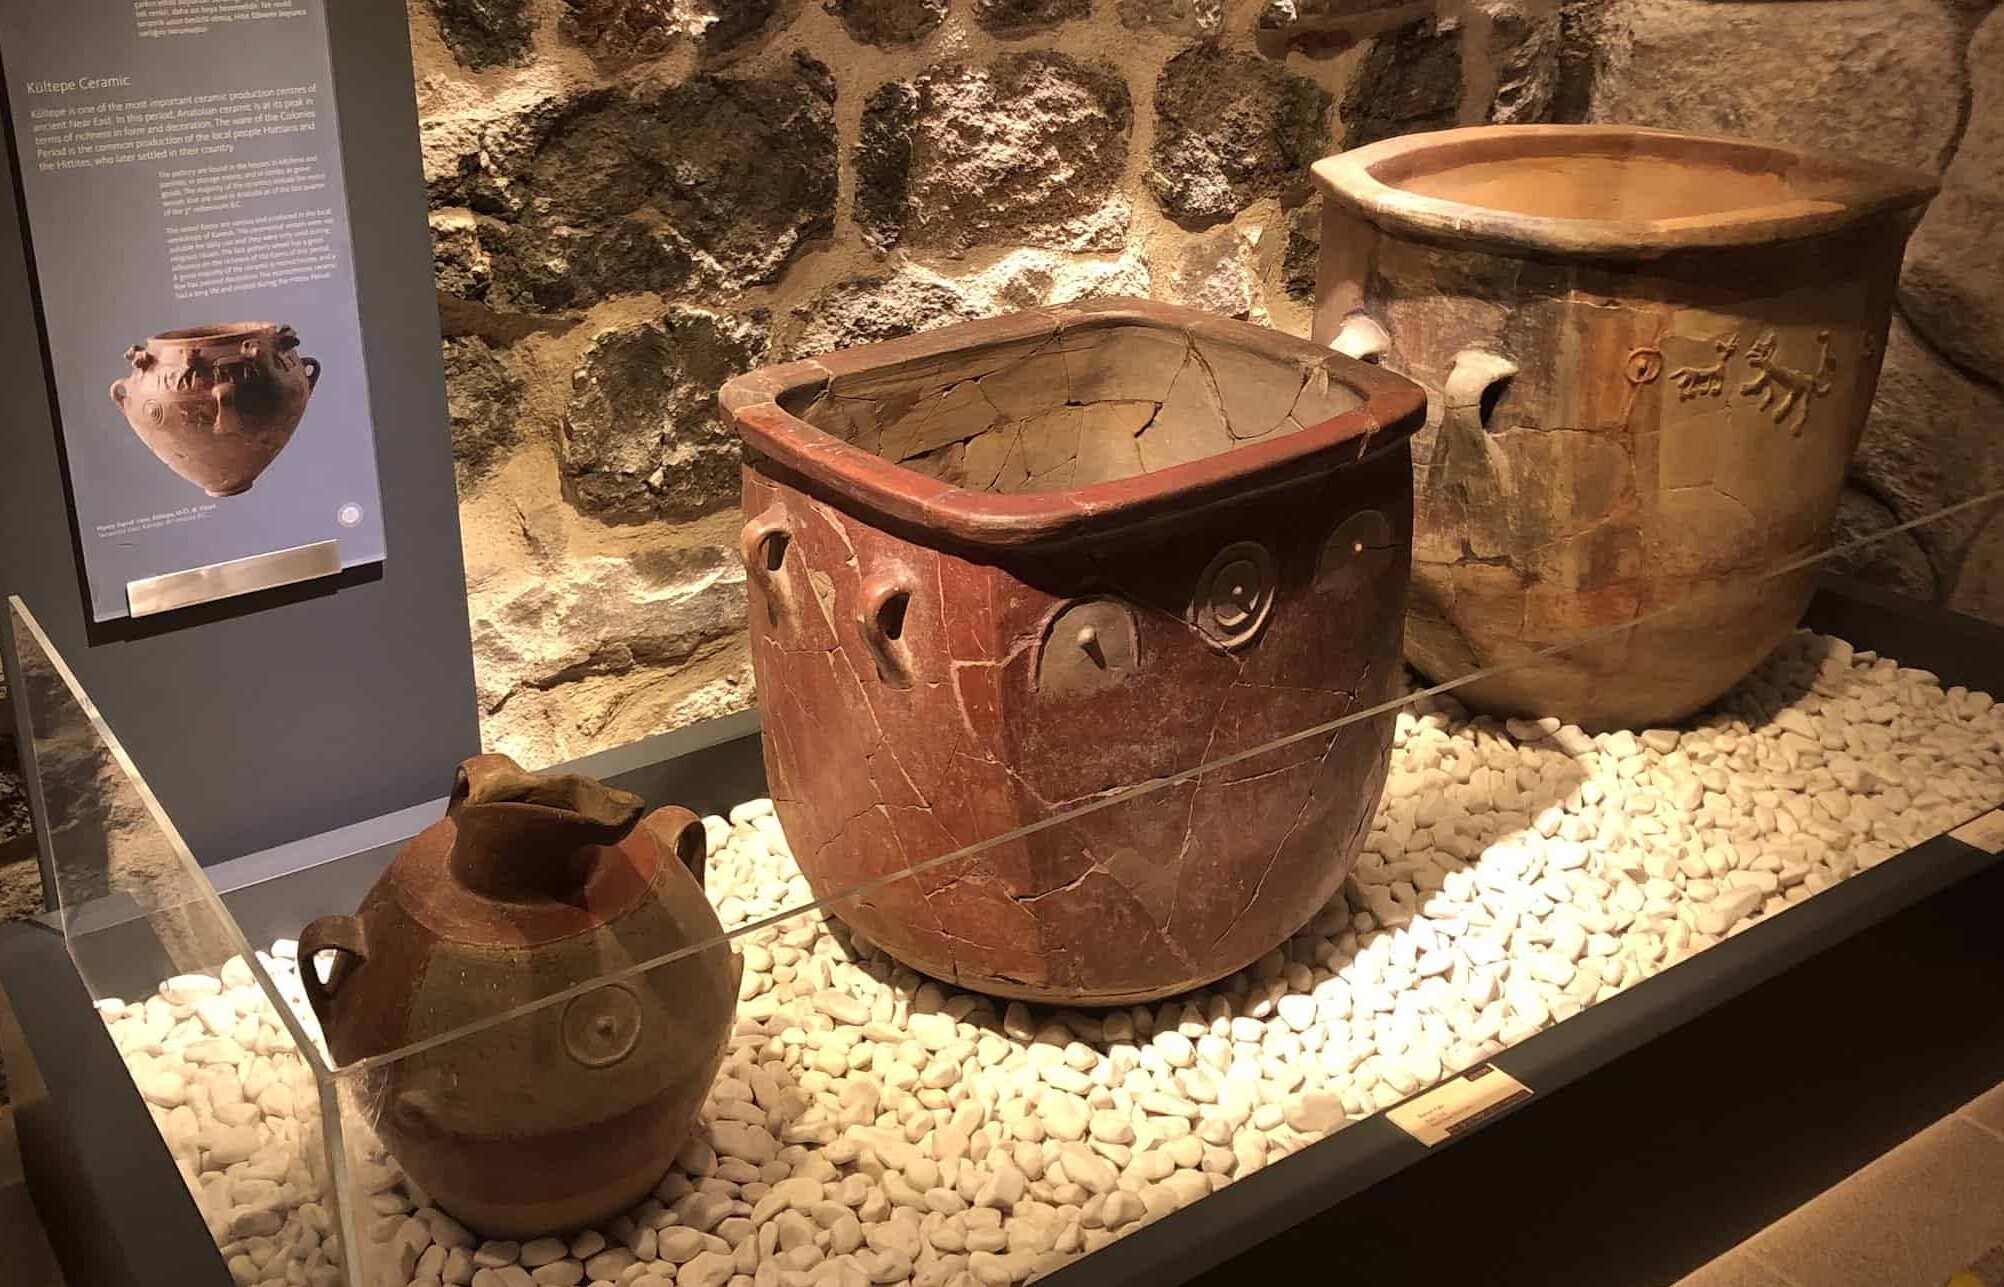 Kültepe ceramics at the Museum of Anatolian Civilizations in Ankara, Turkey